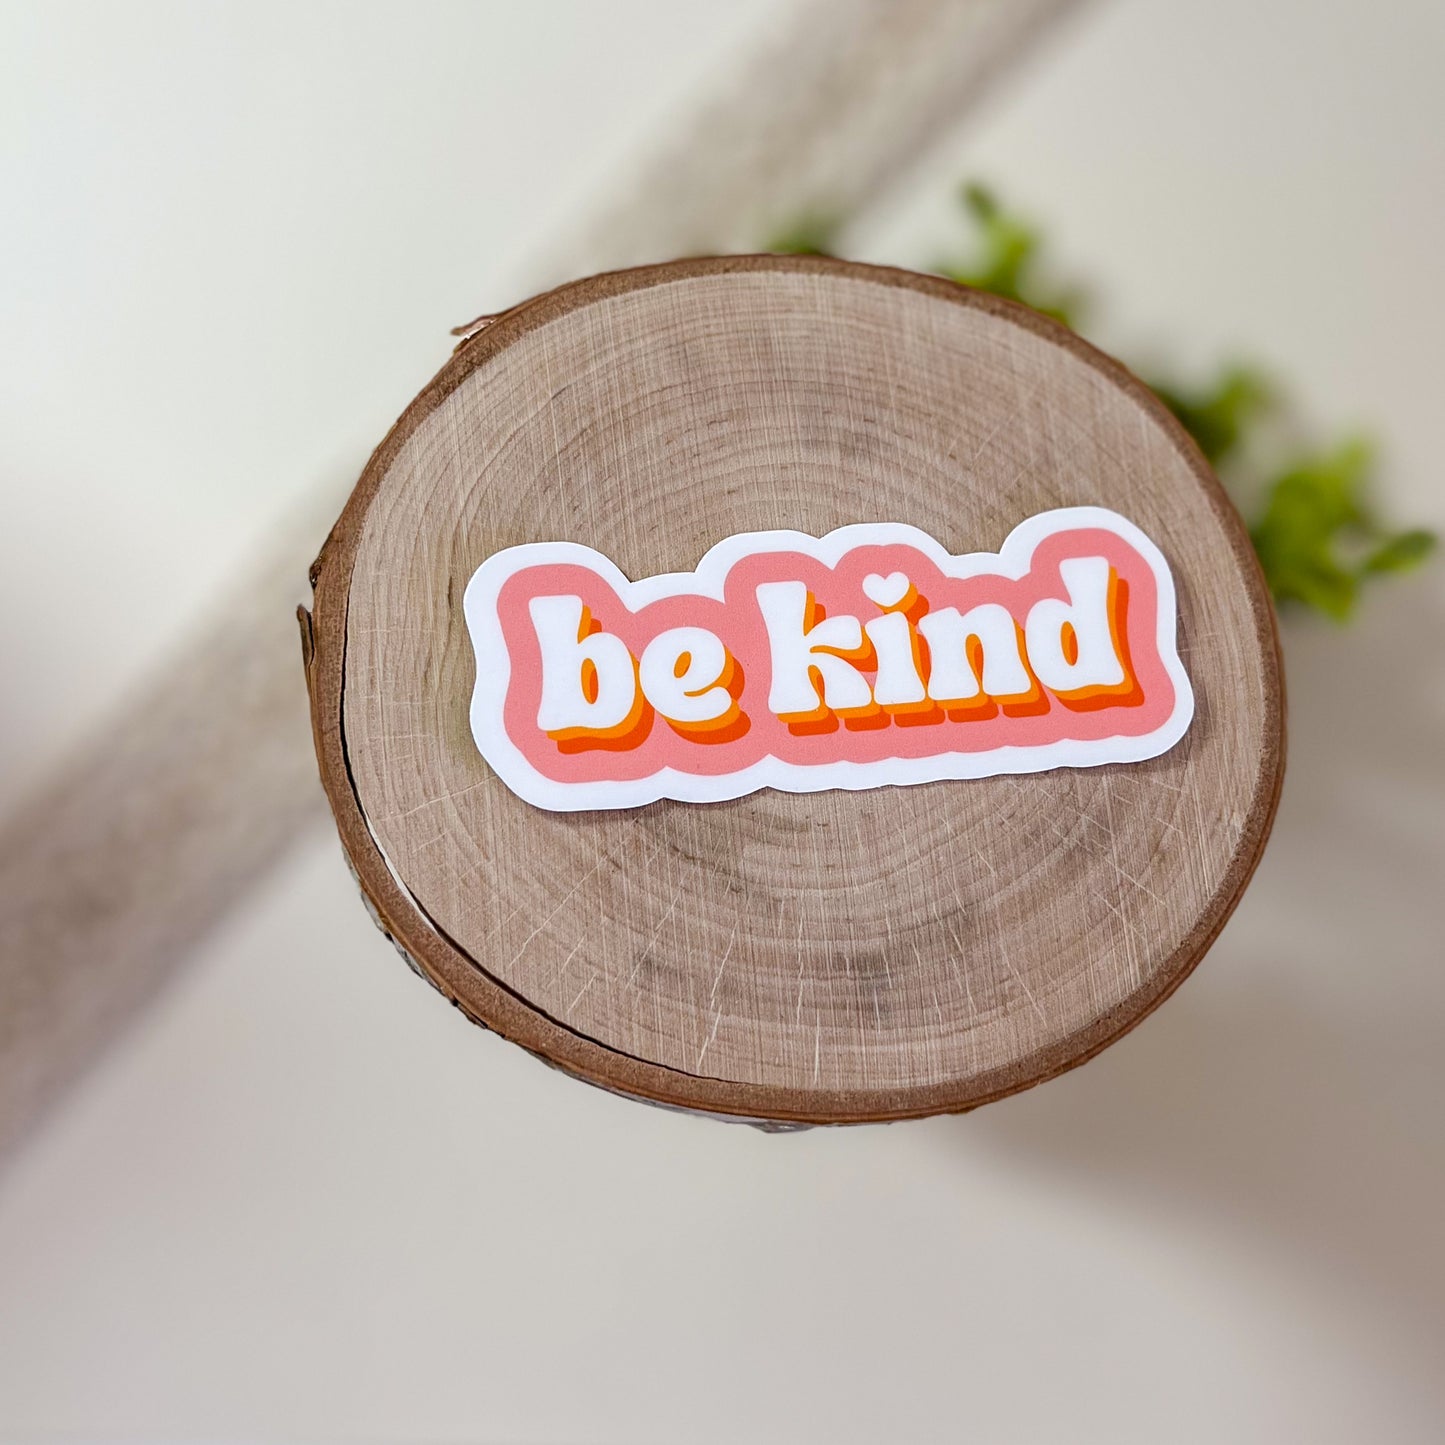 Be kind sticker